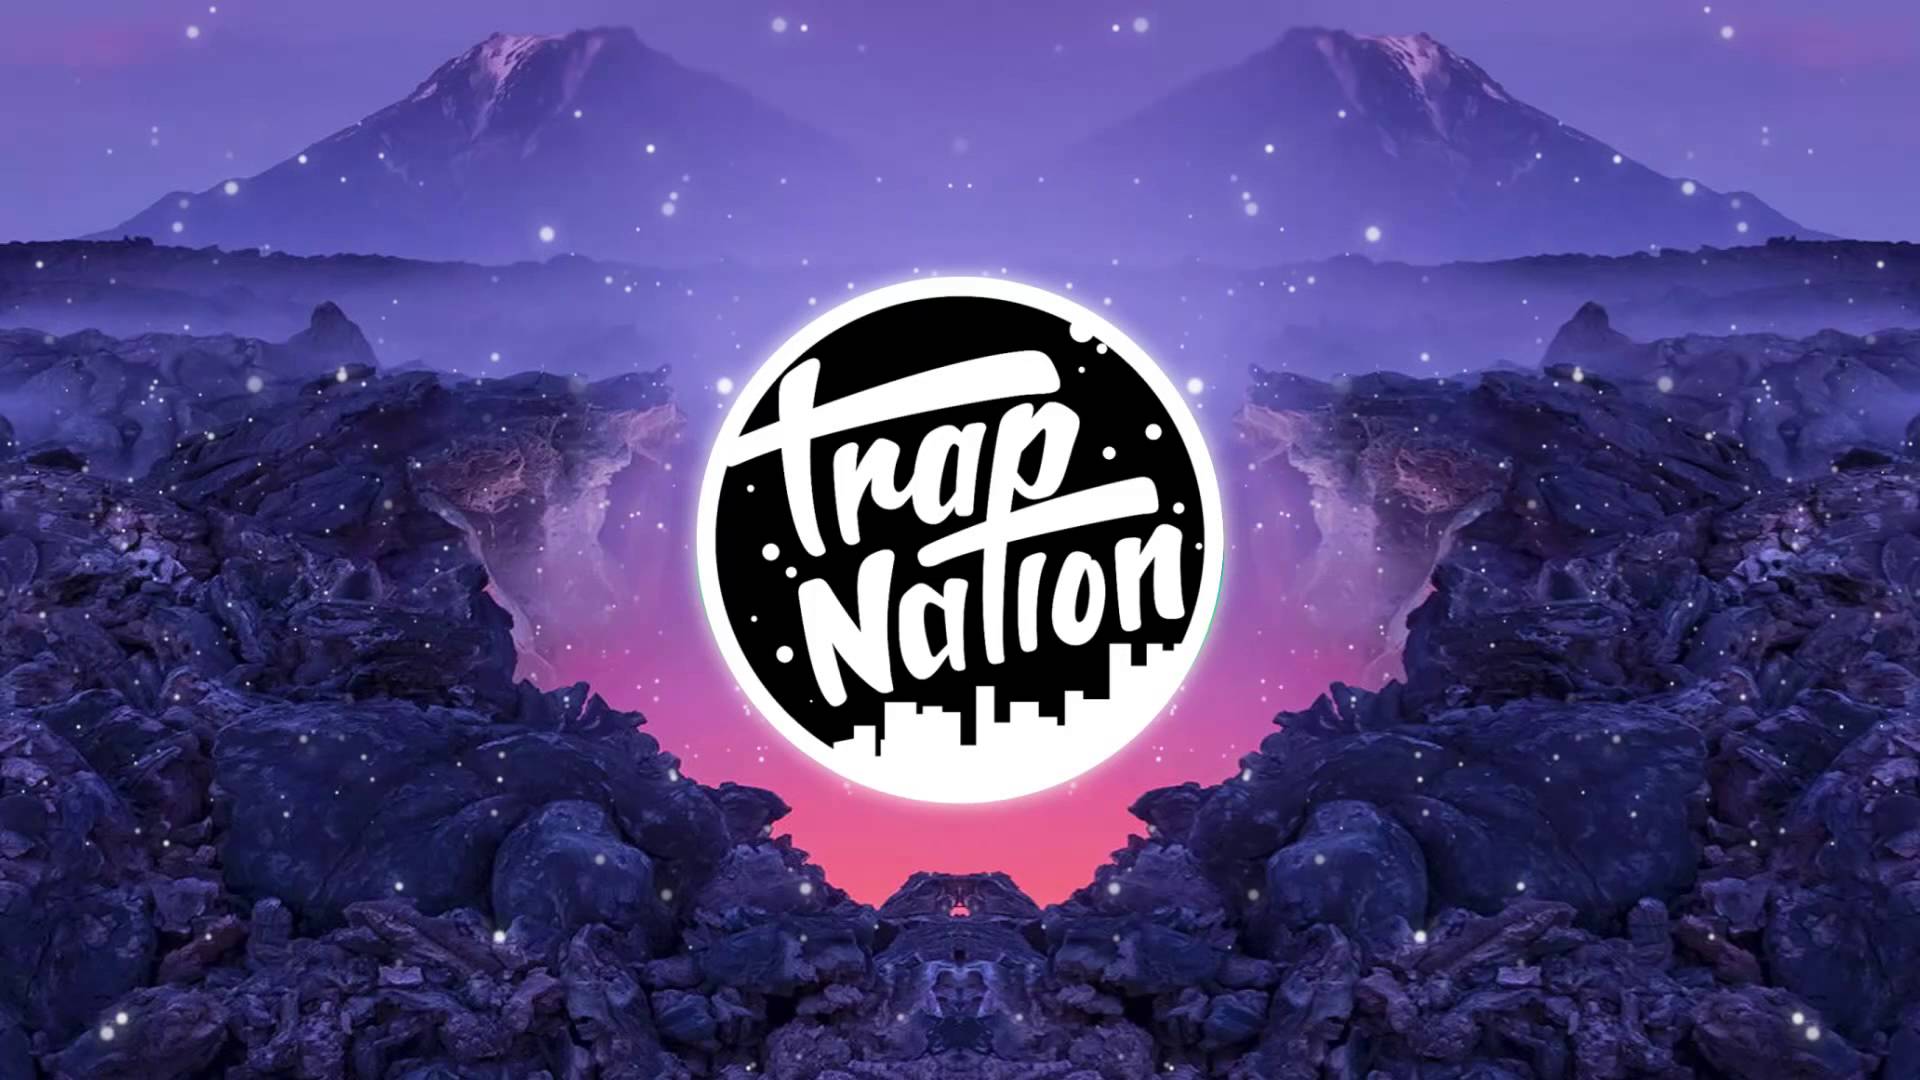 Eeyuh remix super slowed. Trap Nation. Фон для Trap Nation. Трап. Шапка Trap Nation.